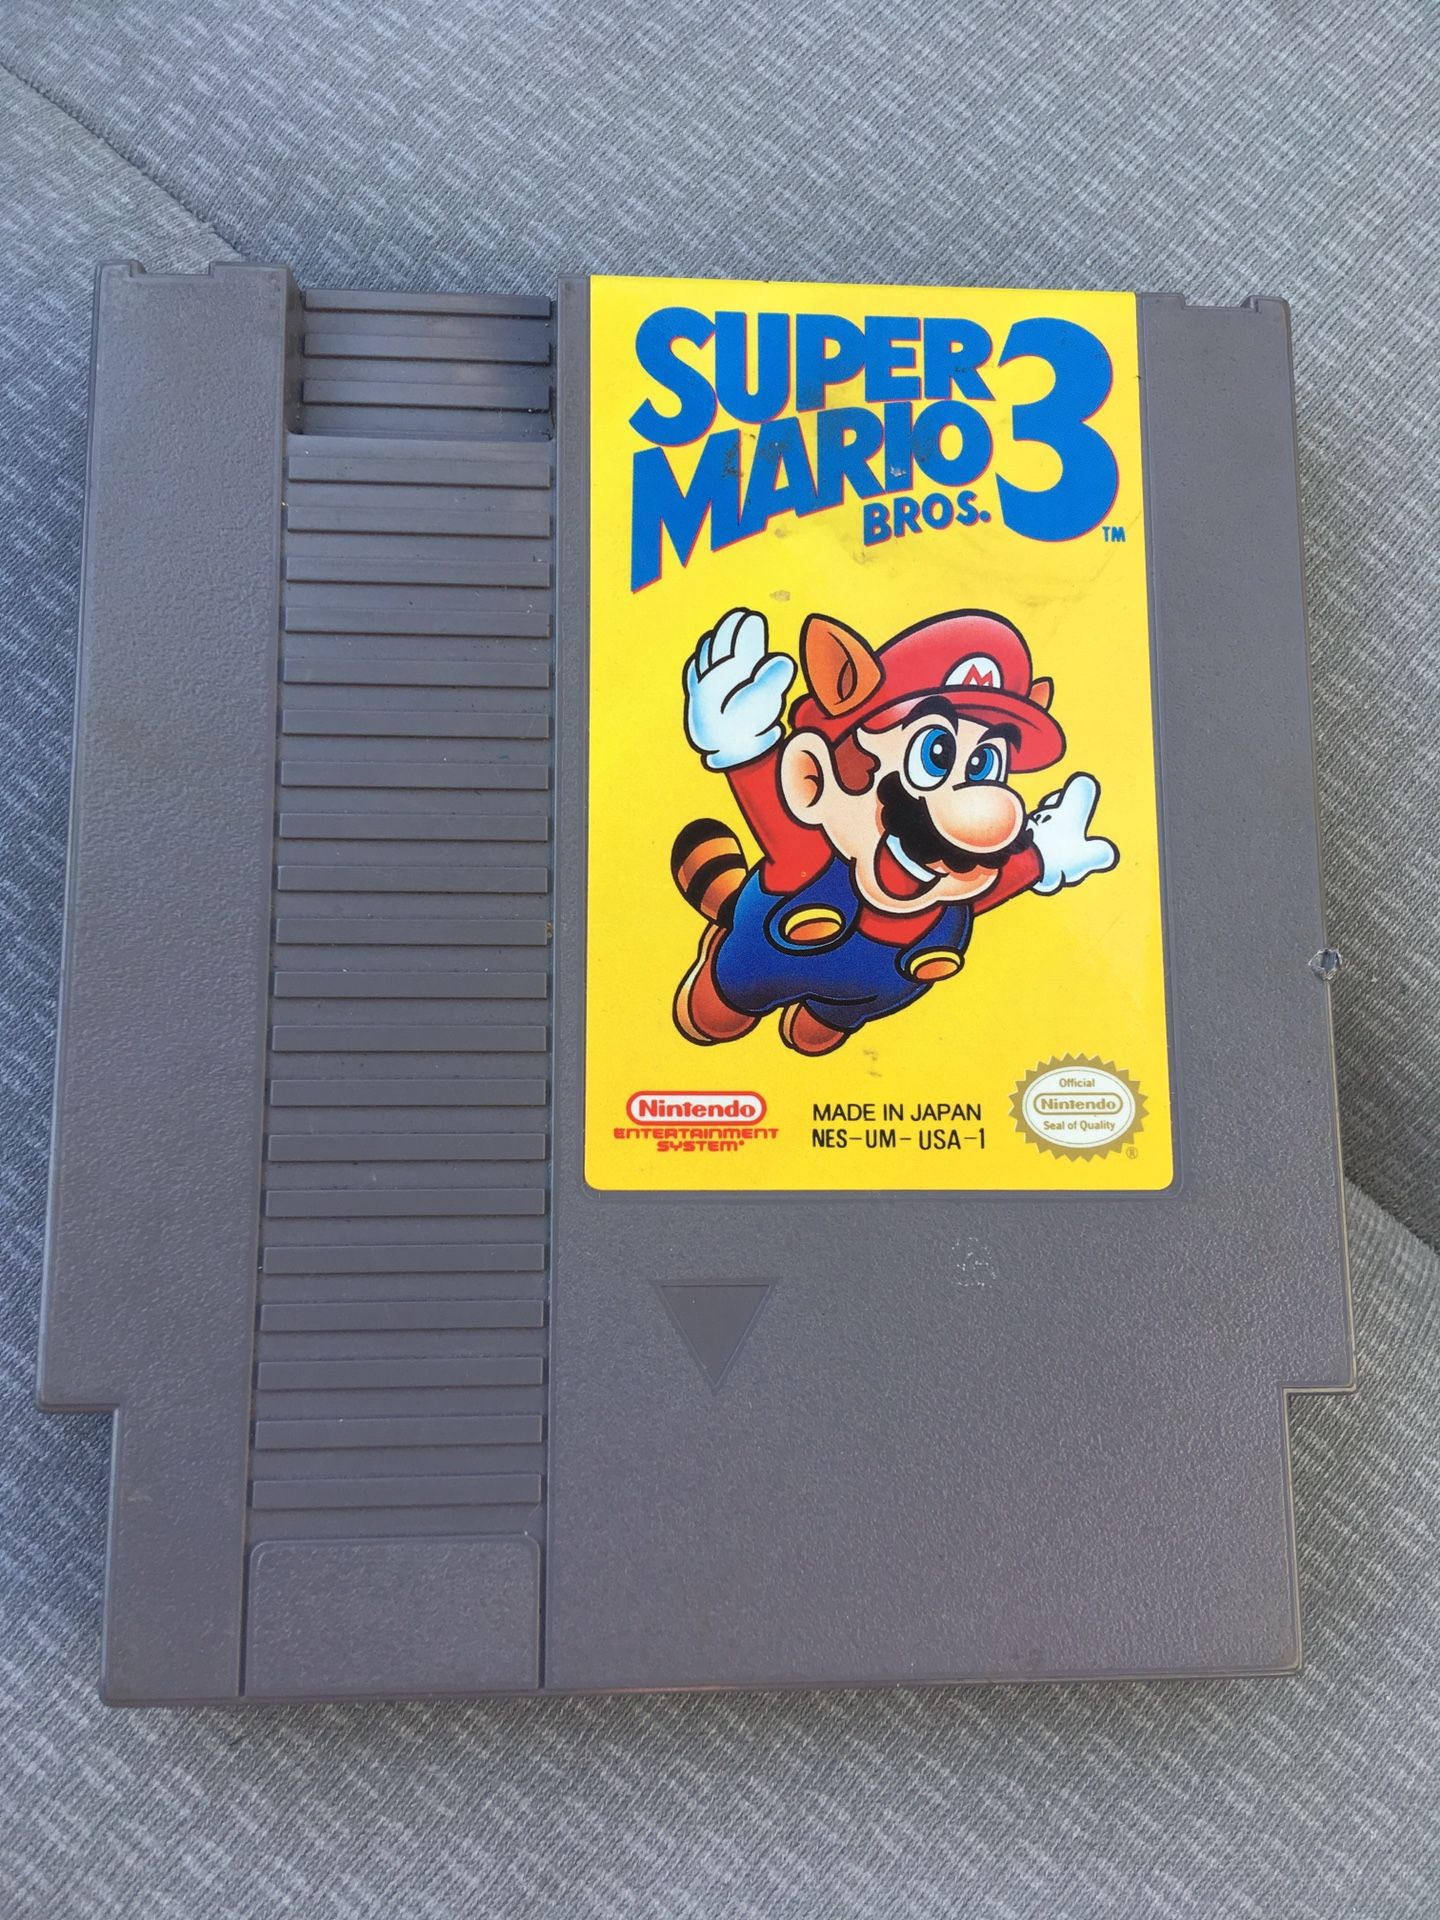 Super Mario 3 original Nintendo game